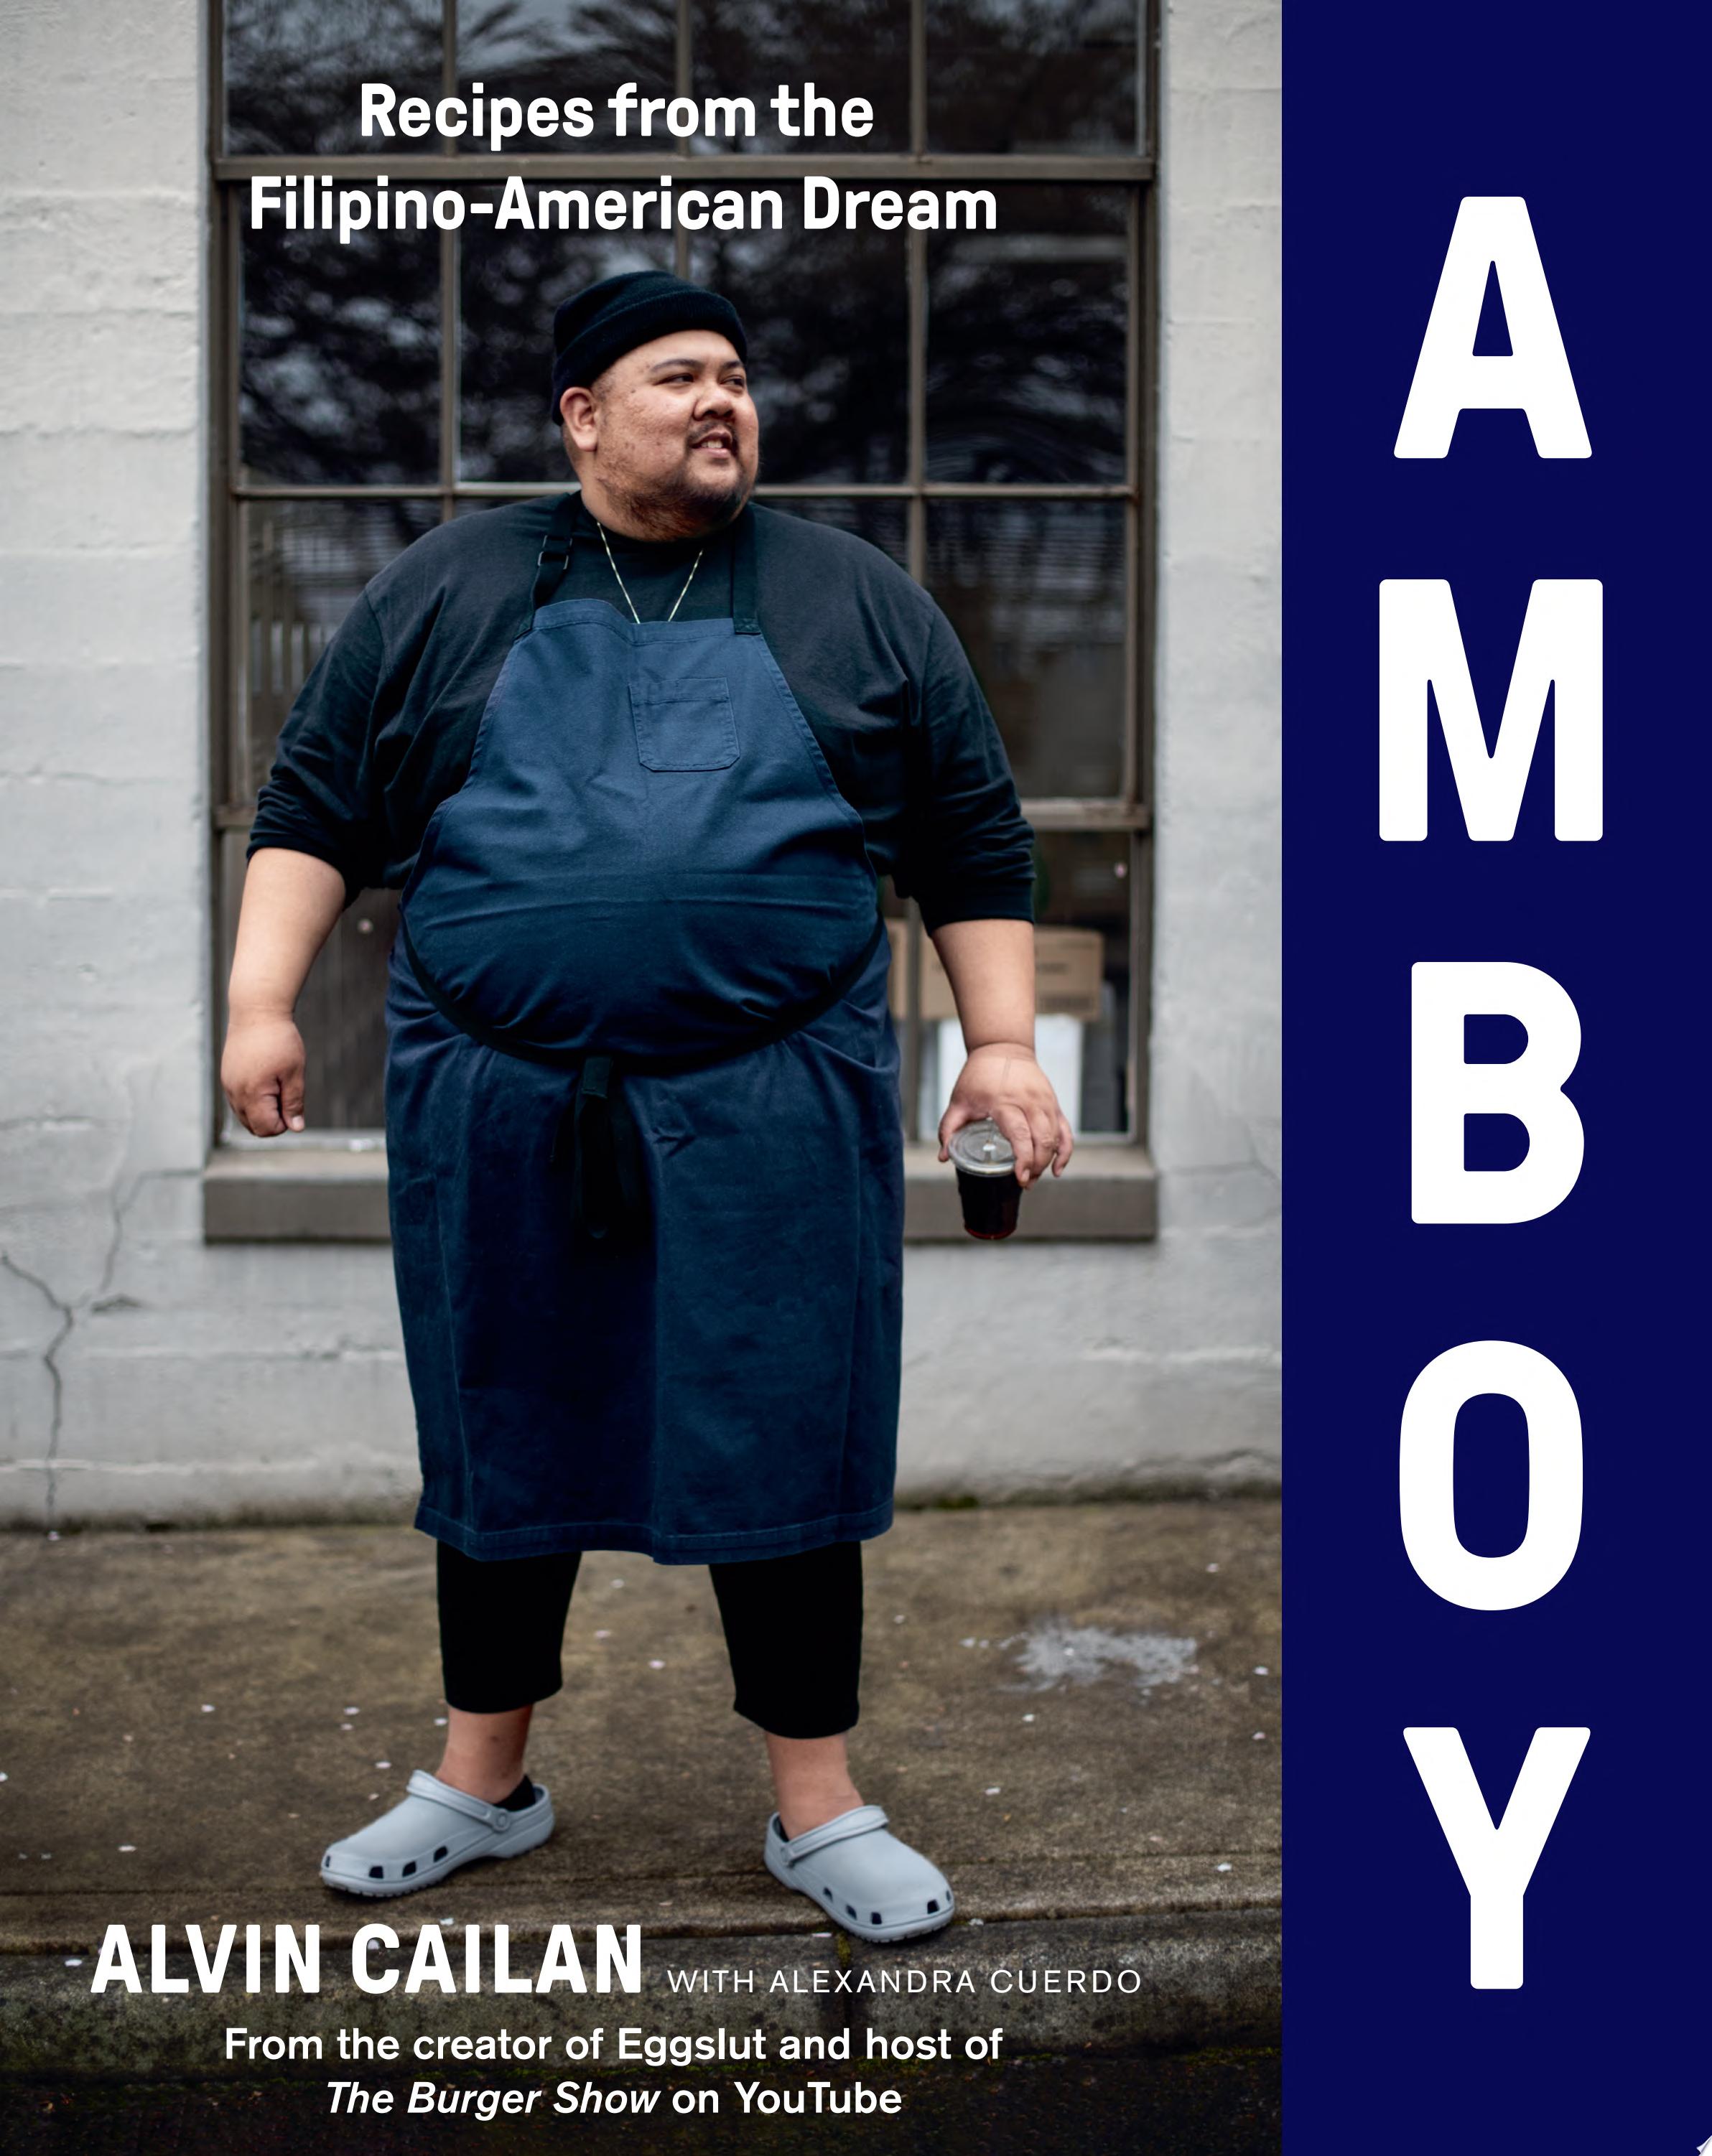 Image for "Amboy"